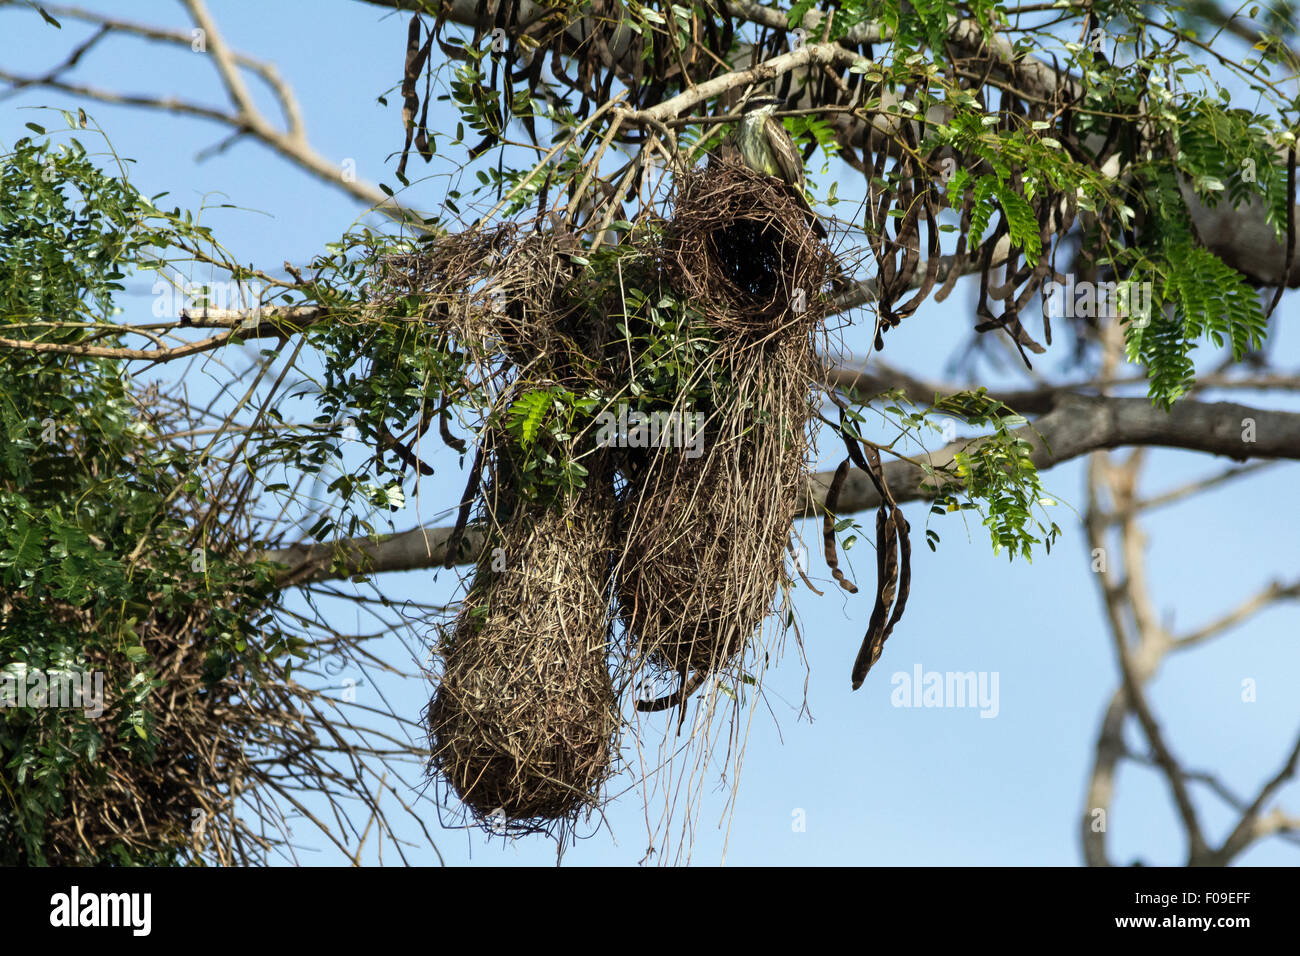 Weaver bird nests with (query) white bearded flycatcher, Pantanal wetlands, Brazil Stock Photo